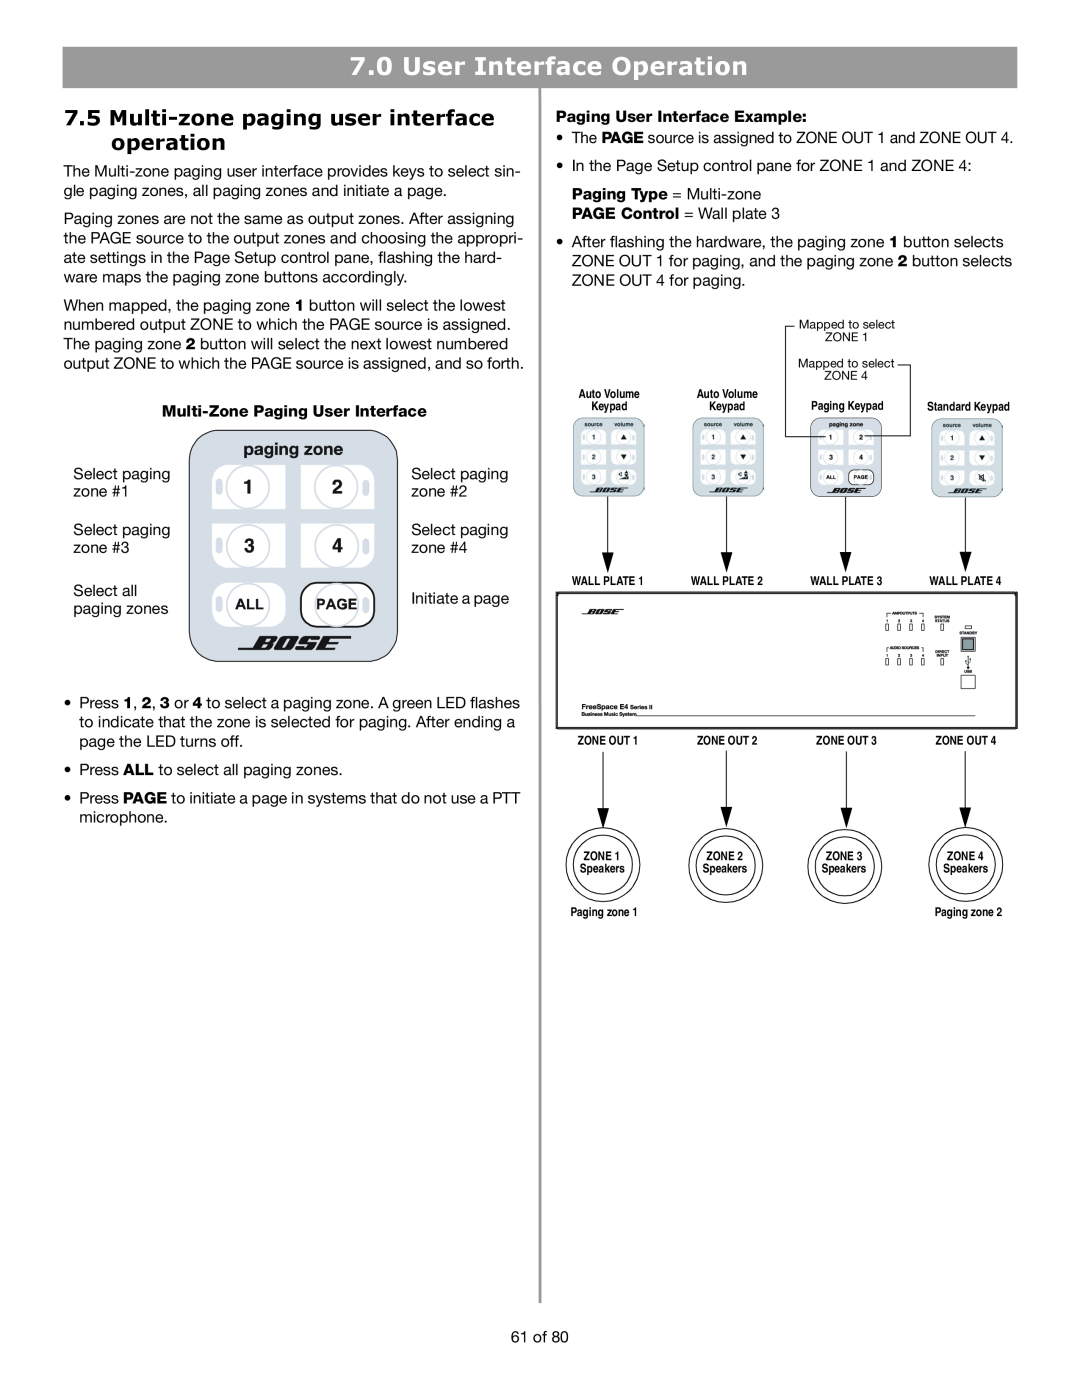 Bose E4 manual 7.5Multi-zonepaging user interface operation, User Interface Operation, Multi-ZonePaging User Interface 